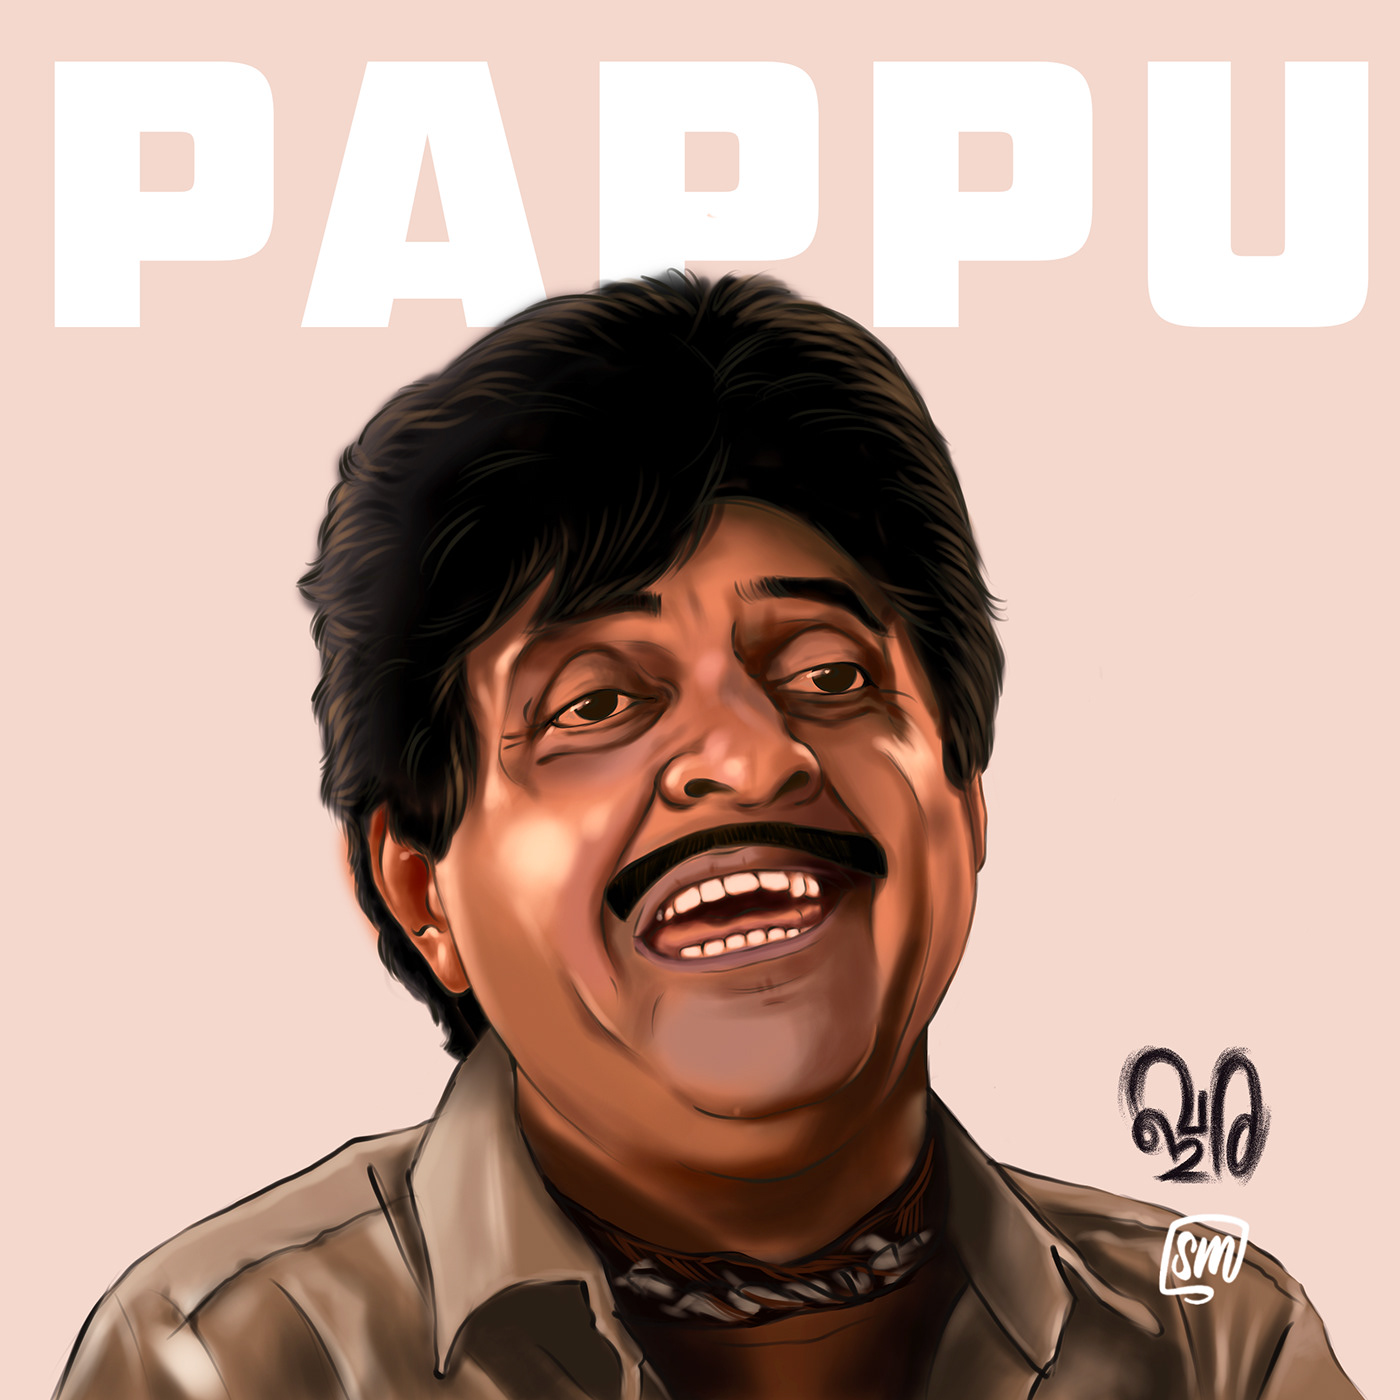 Pappu the malayalam movie actor.